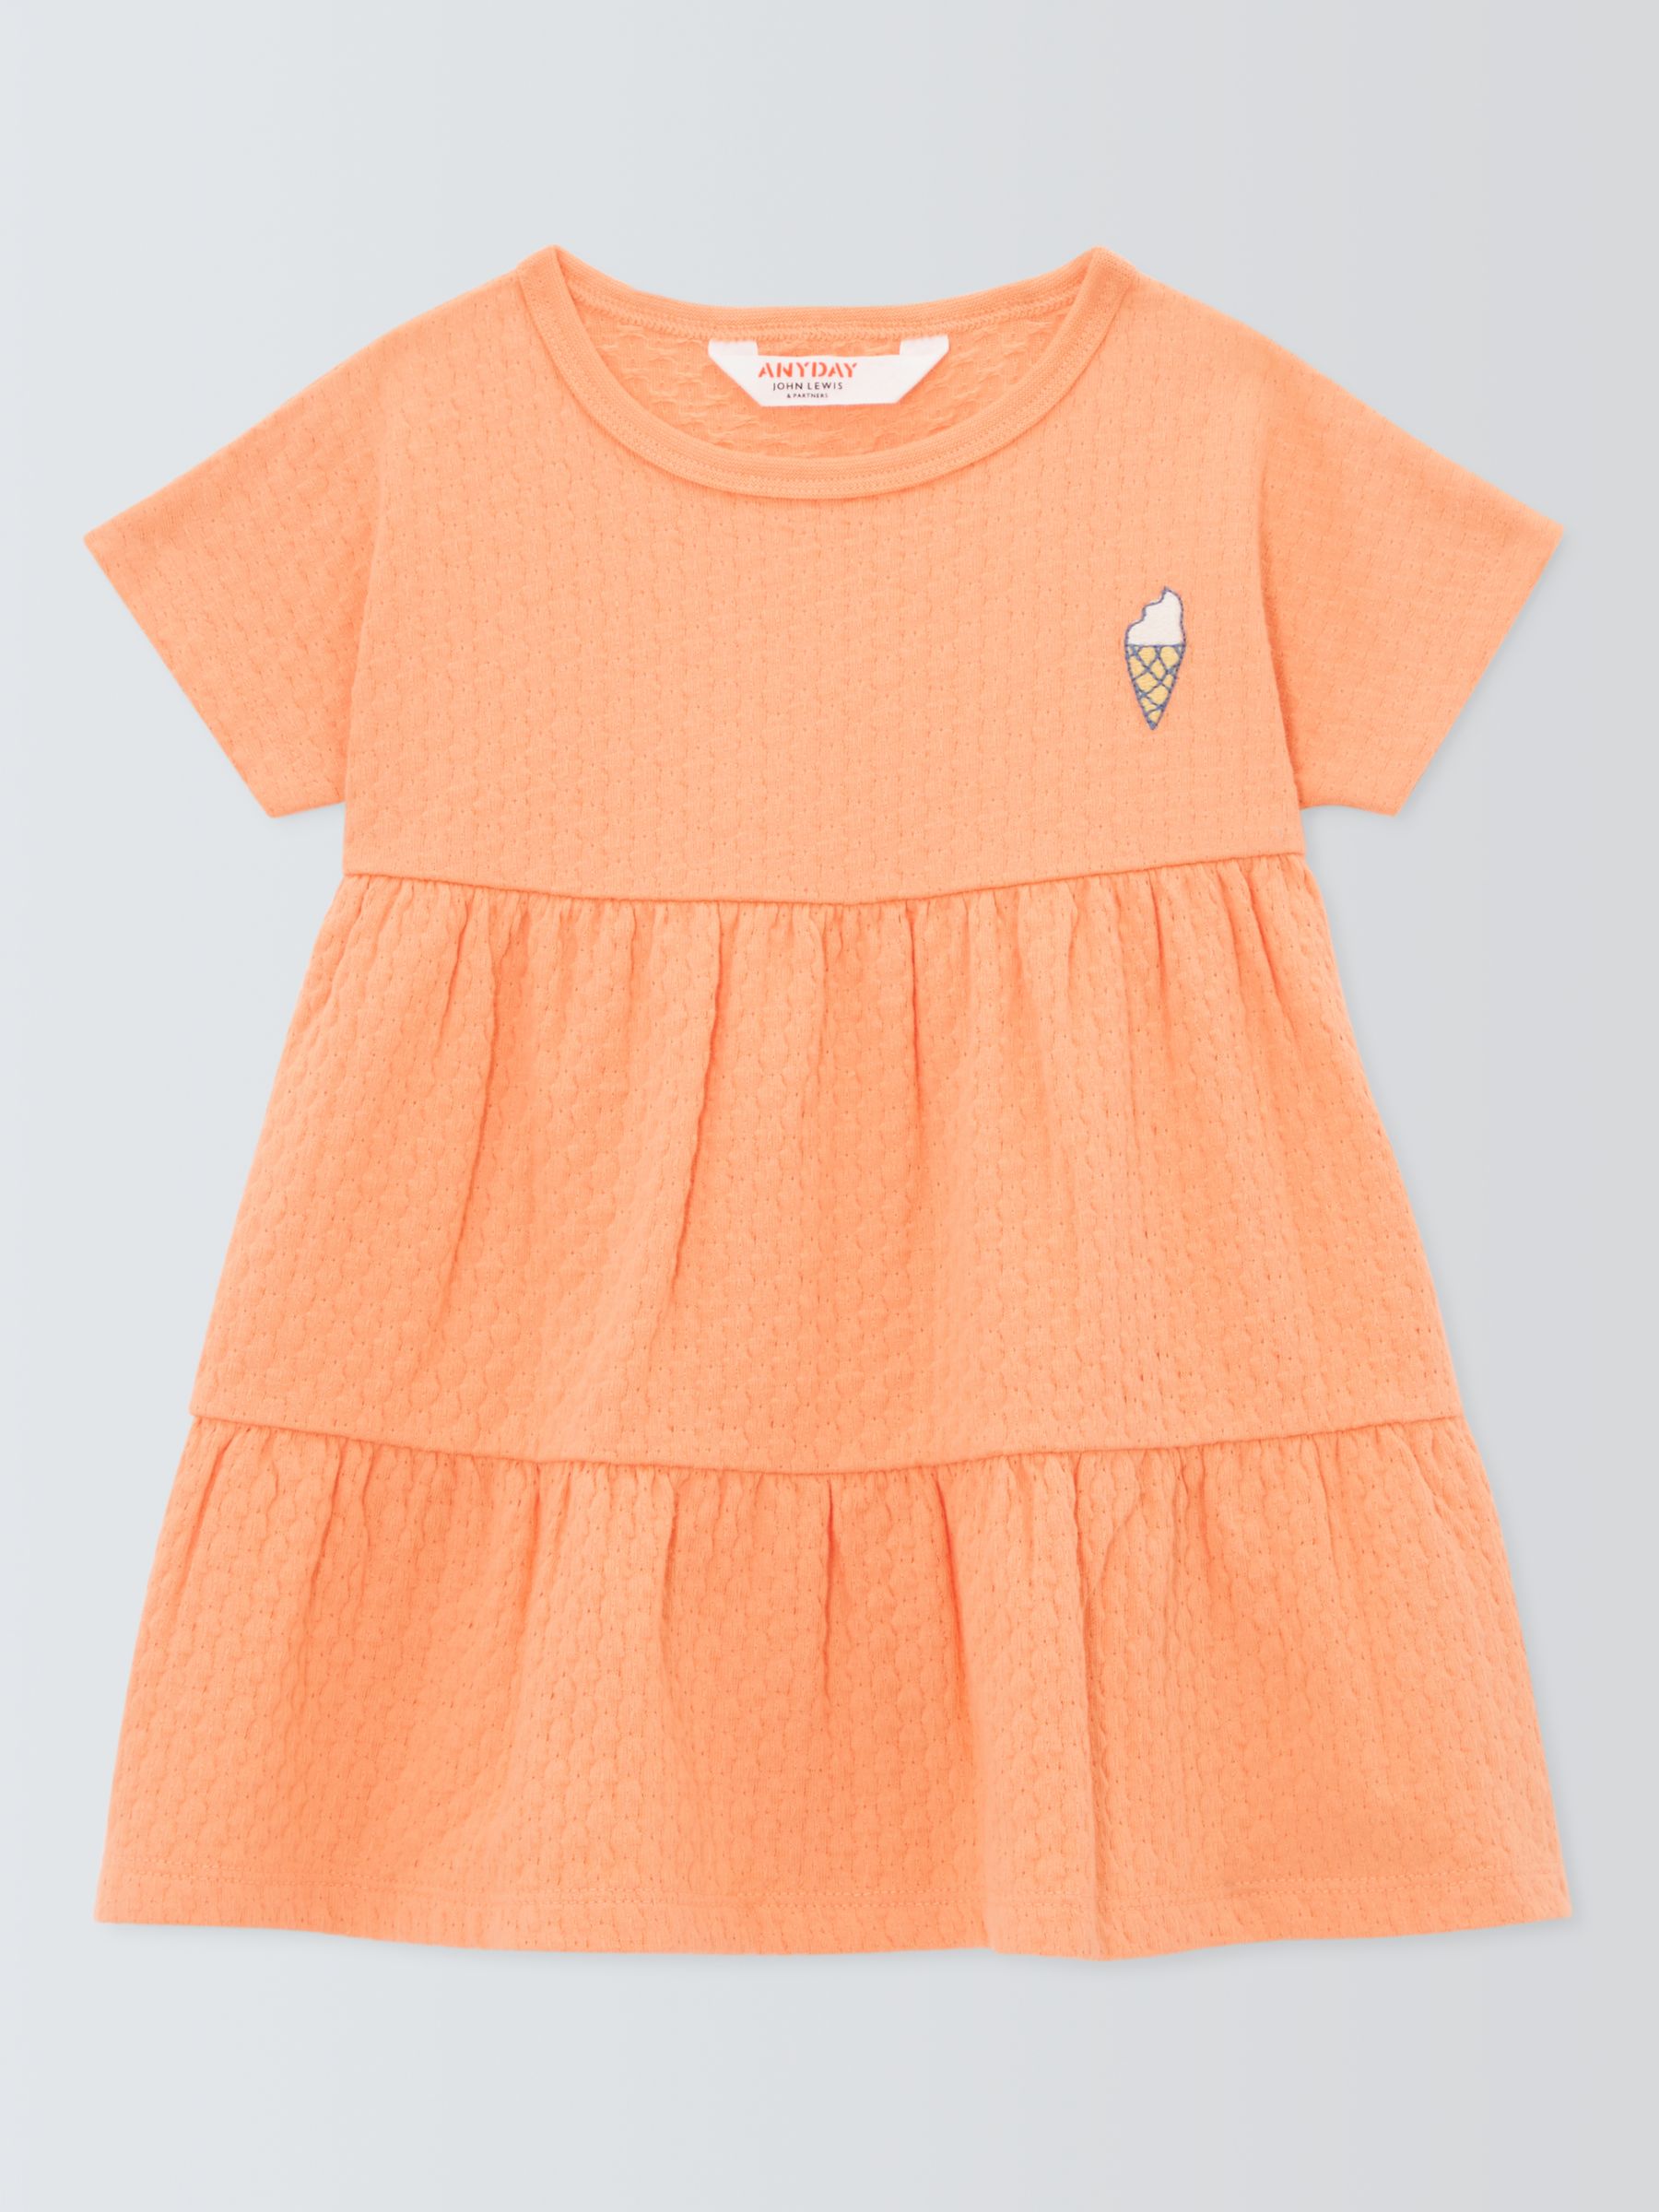 John Lewis ANYDAY Baby Honeycomb Embroidered Ice Cream Dress, Orange, 2-3 years